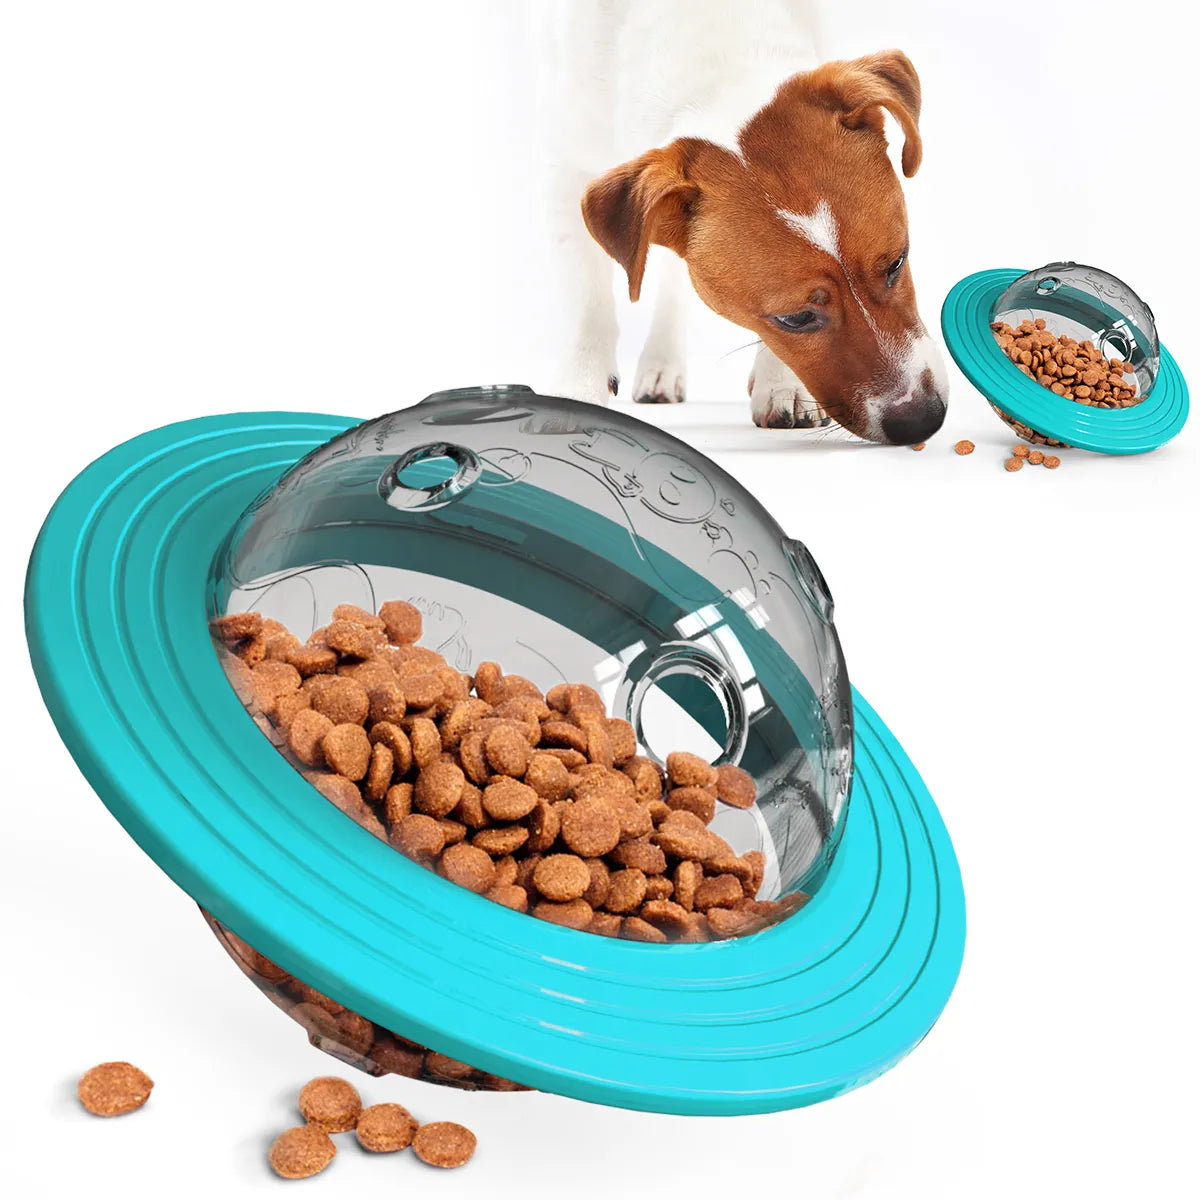 Planet Pup IQ Treat Toy: Interactive Food Dispensing & Training Fun  petlums.com   